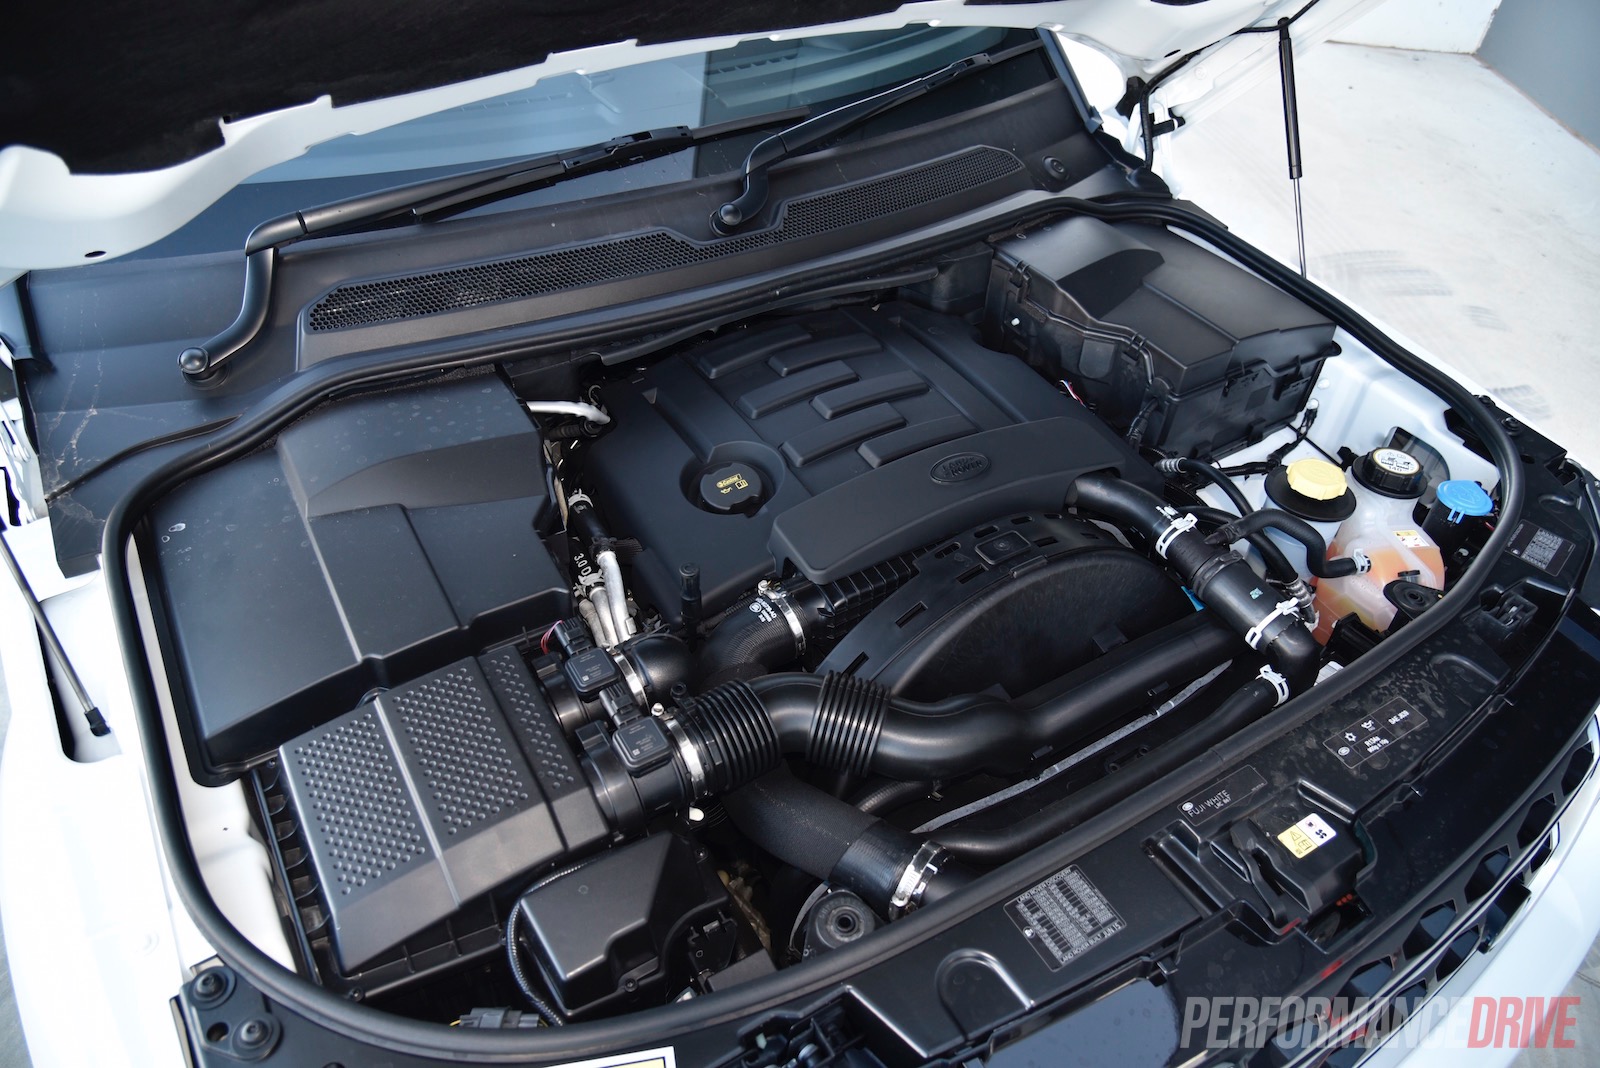 2016 Land Rover Discovery Sdv6 Engine Performancedrive